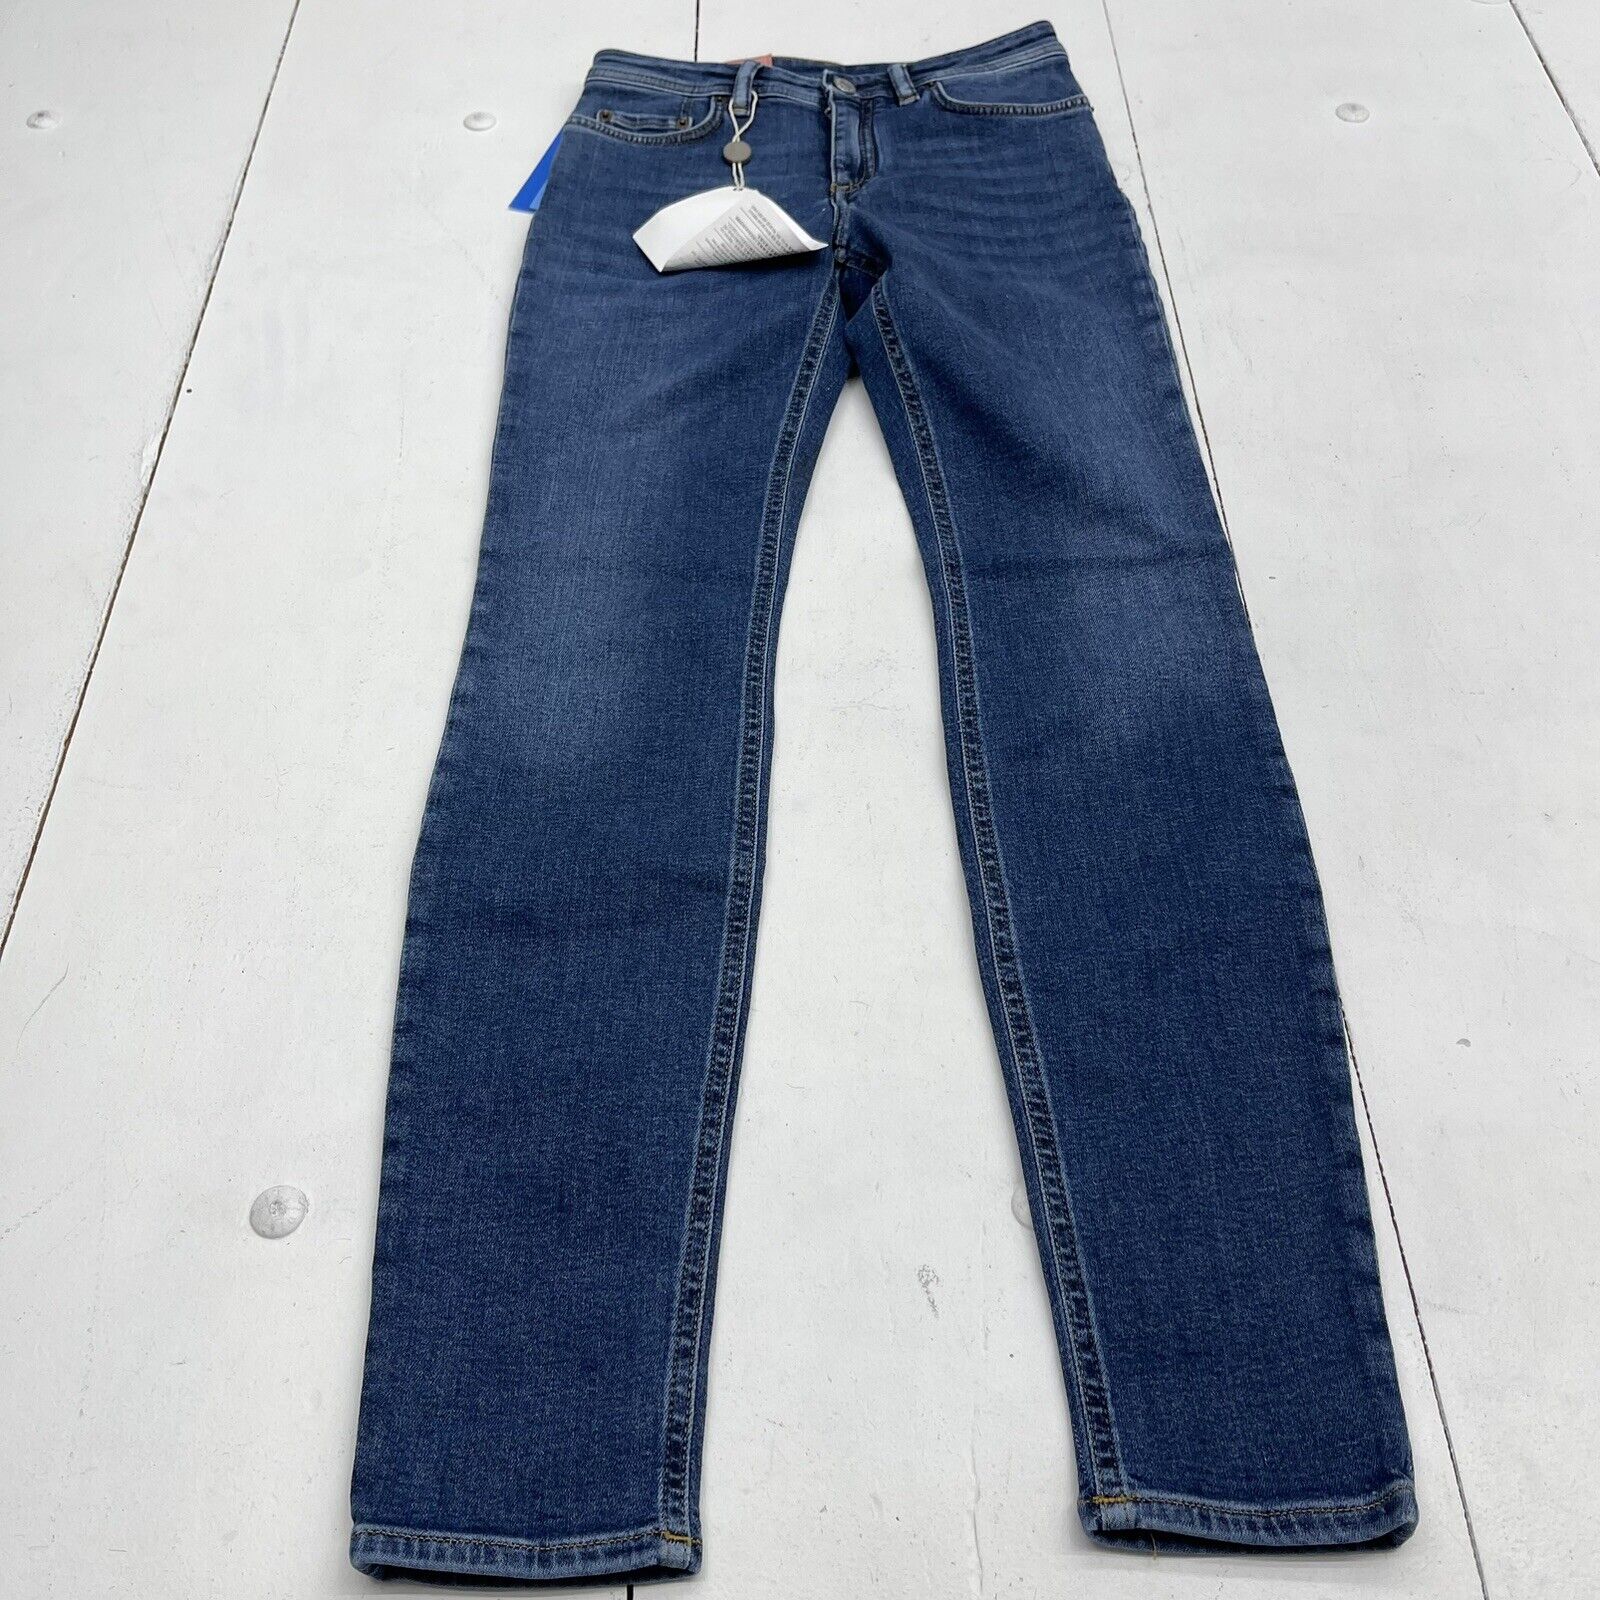 Acne Studios Bla Konst Climb Mid Blue Skinny Jeans Women’s Size 24 New $260